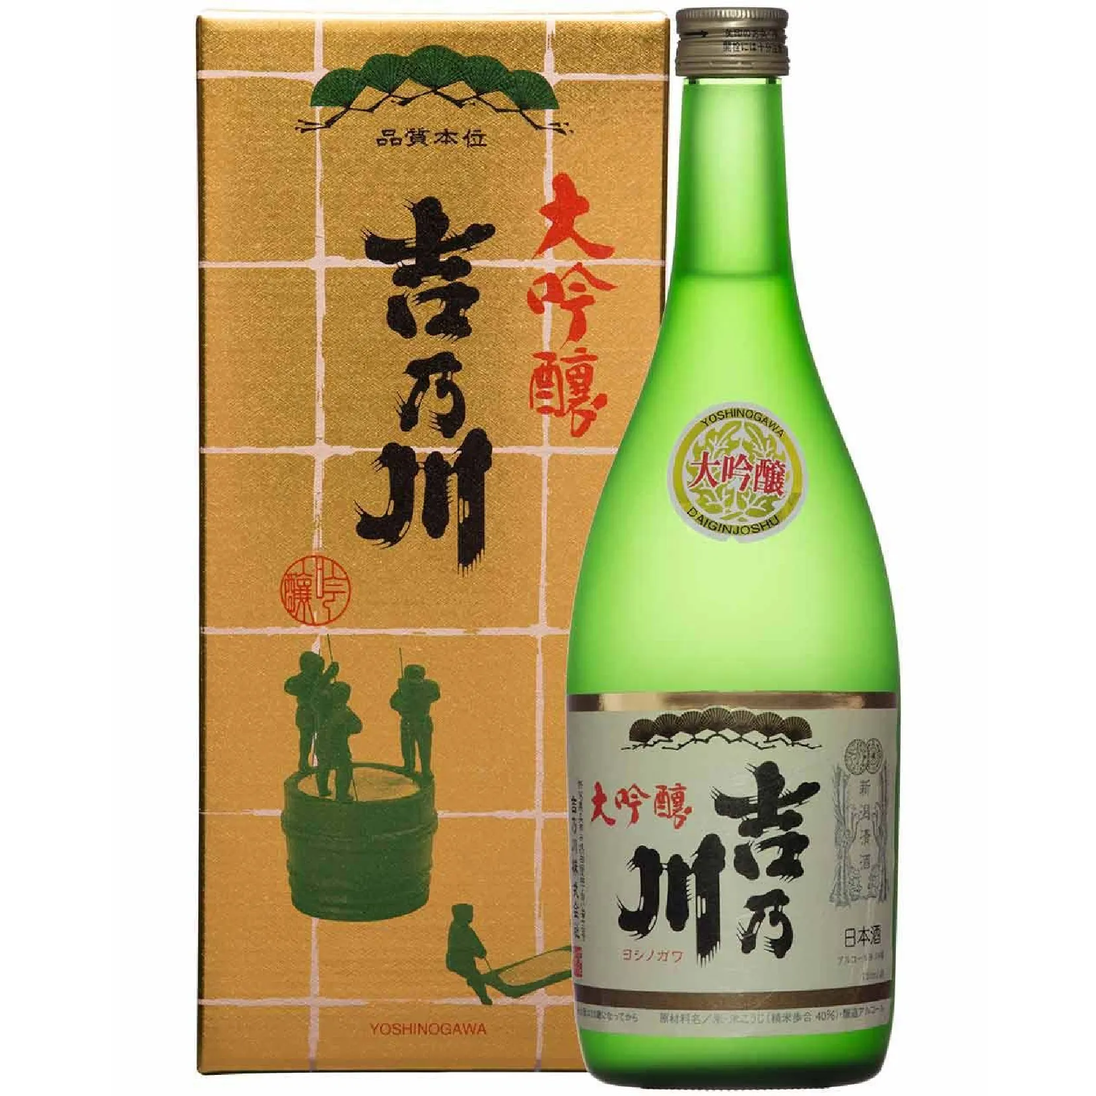 Yoshinogawa Daiginjo Sake (gift box) 720ml offers at $100 in Qantas